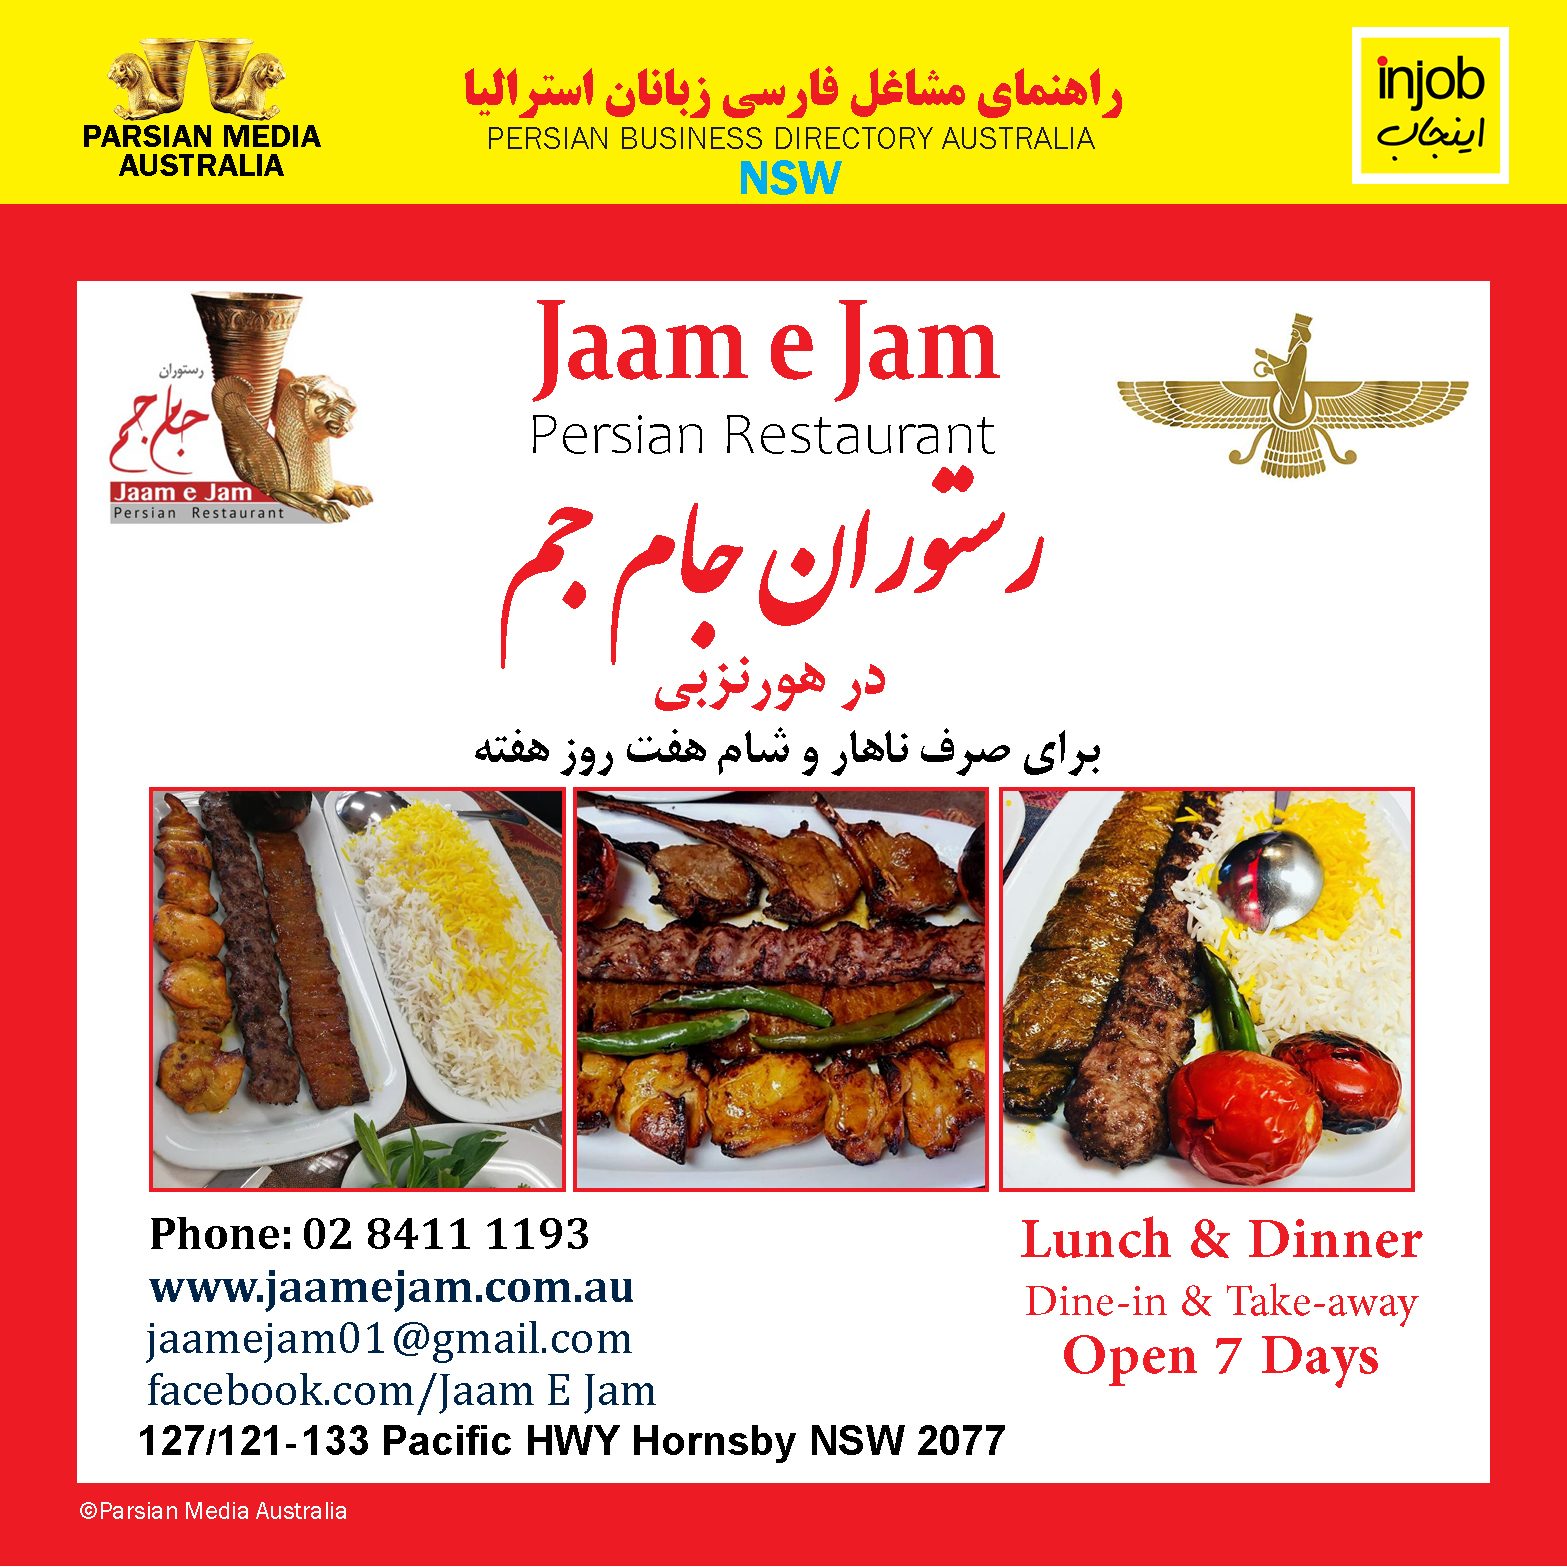 Jamejam-Restaurant-Injob-2021-2022-icon.jpg